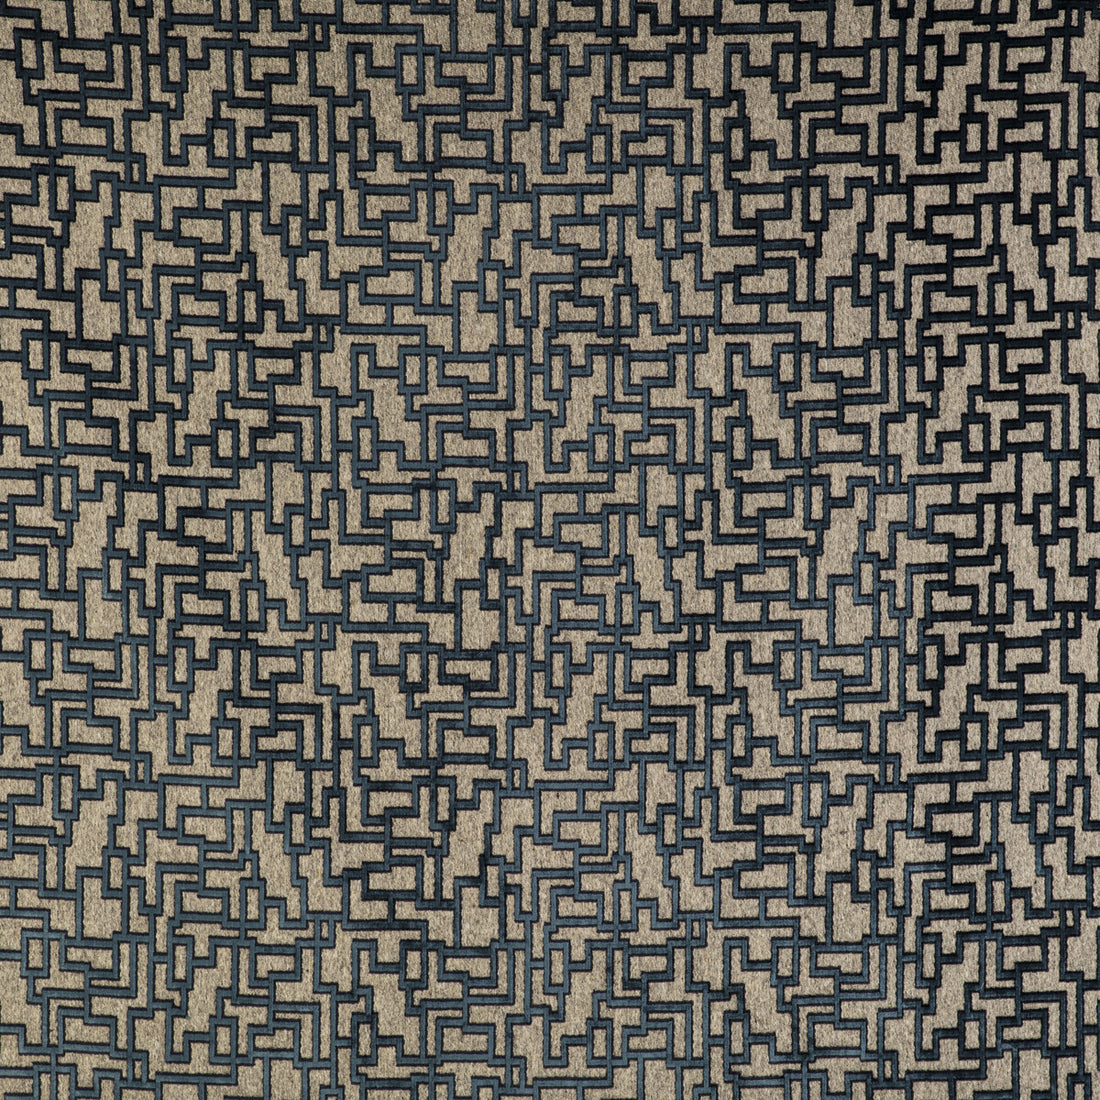 Laberinto fabric in azul color - pattern GDT5501.002.0 - by Gaston y Daniela in the Gaston Libreria collection